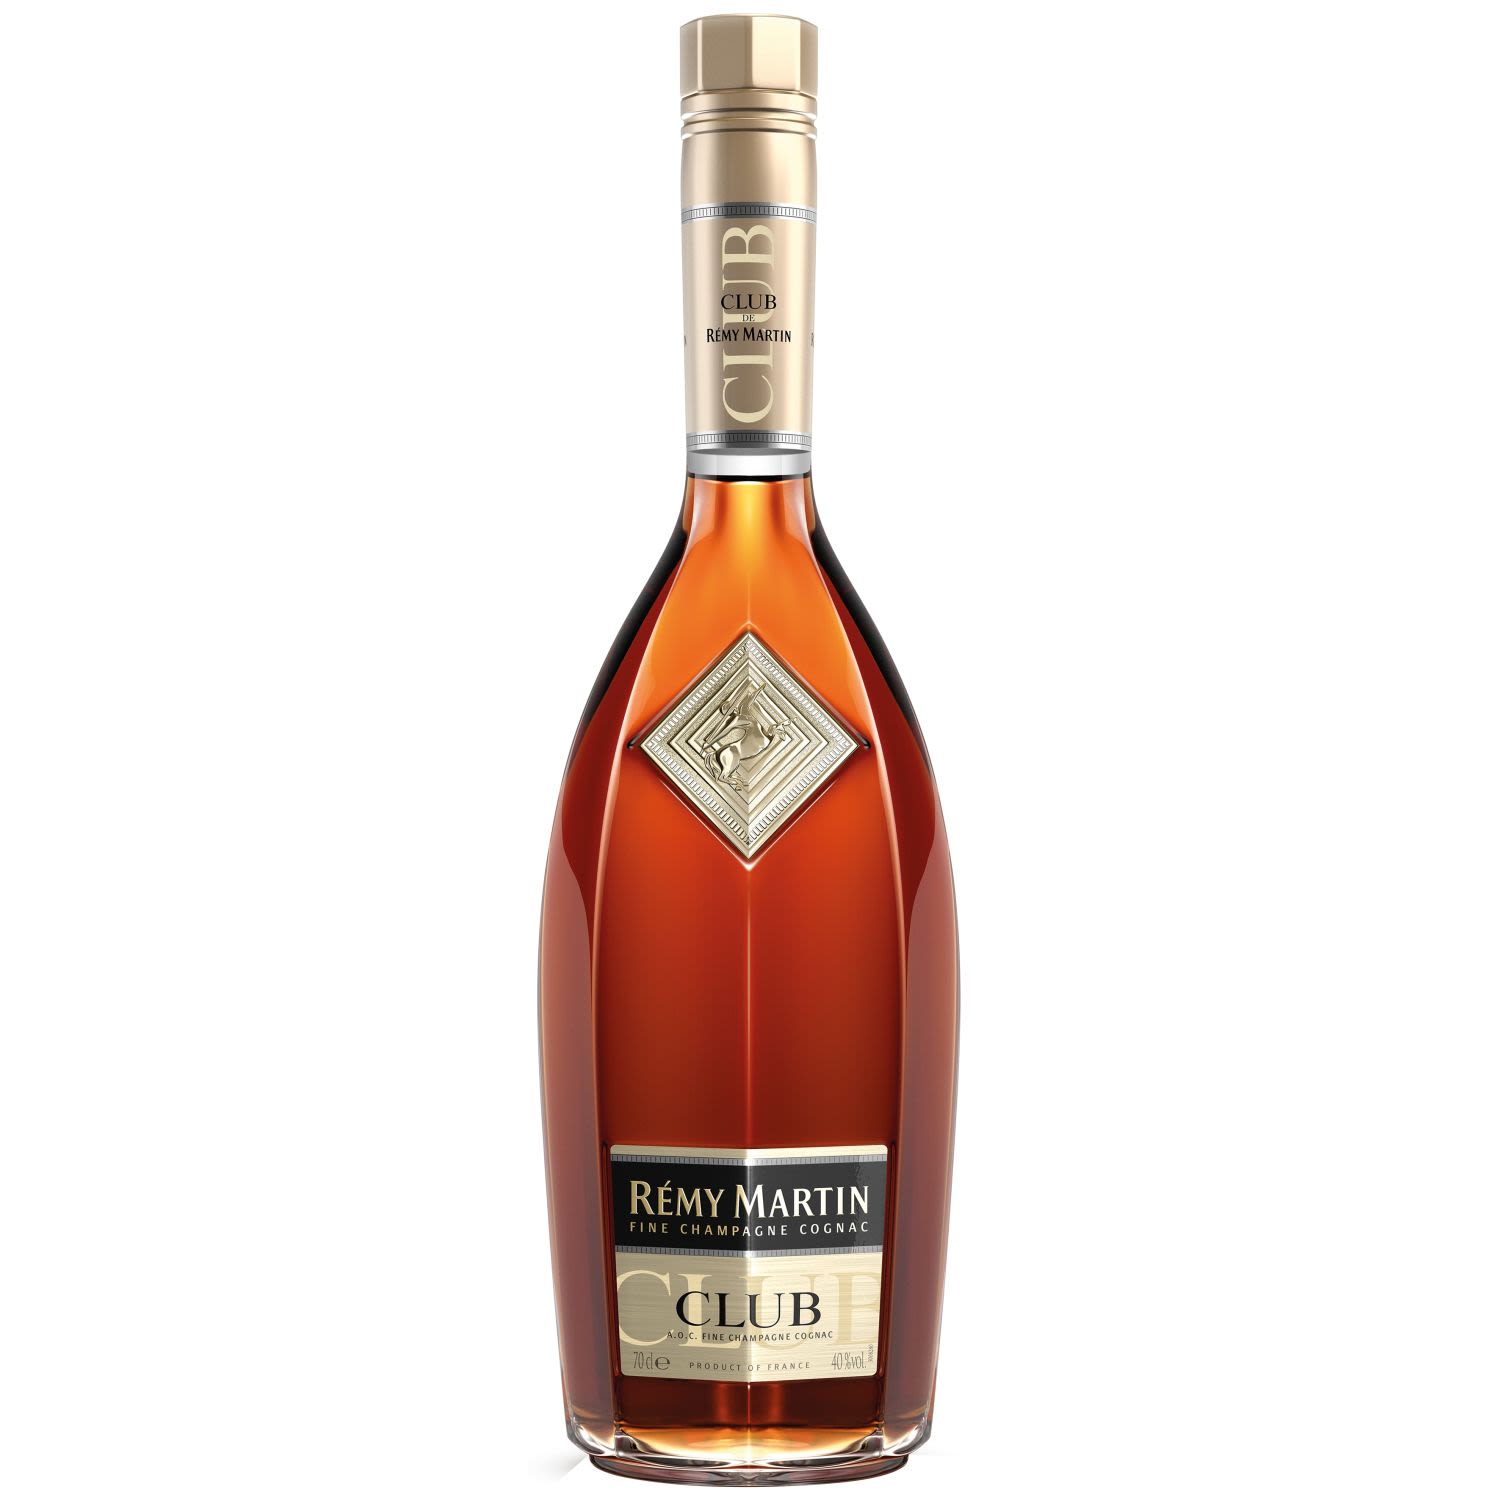 Remy Martin Club Cognac 700mL Bottle